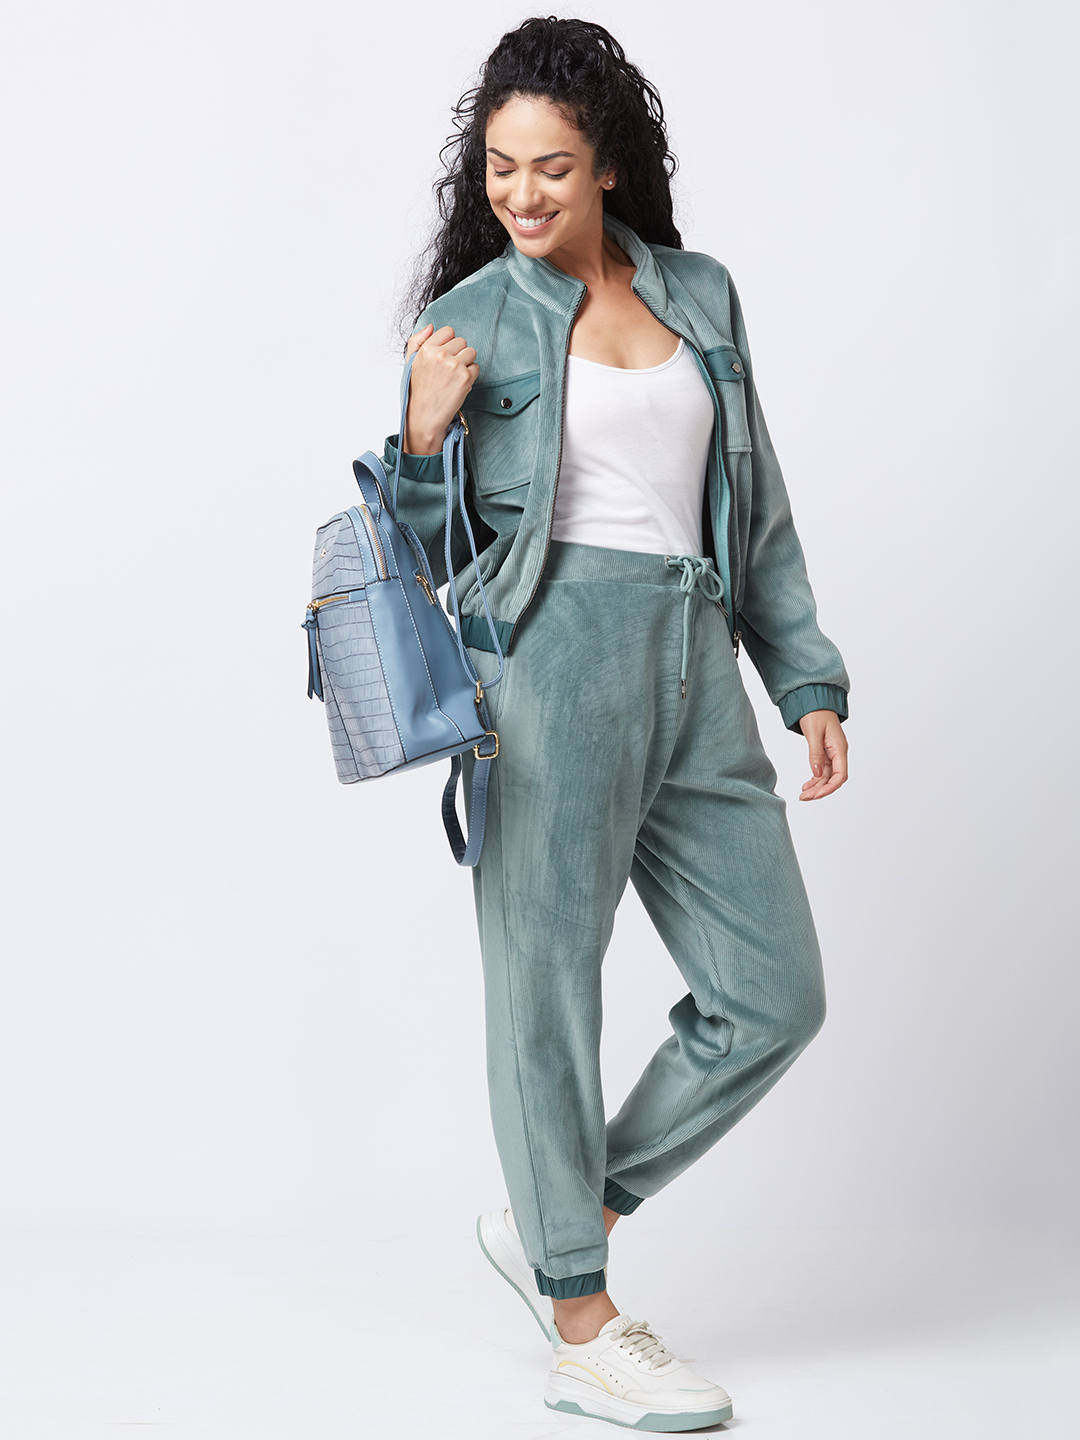 Globus Women Blueish Grey Textured Smart Casual Backpack